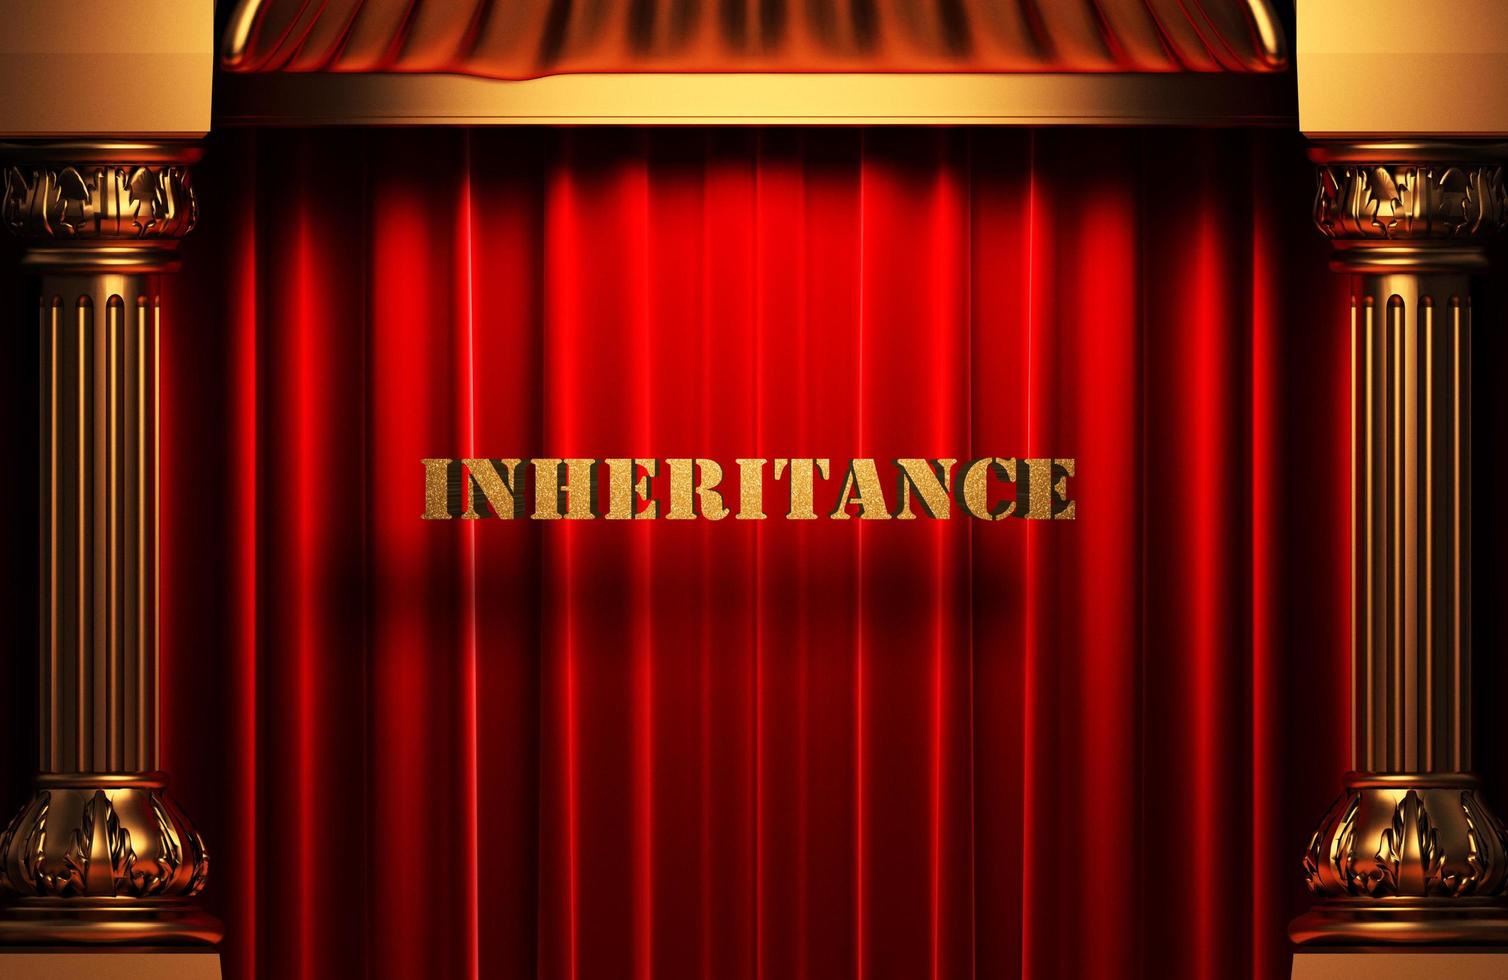 inheritance golden word on red curtain photo